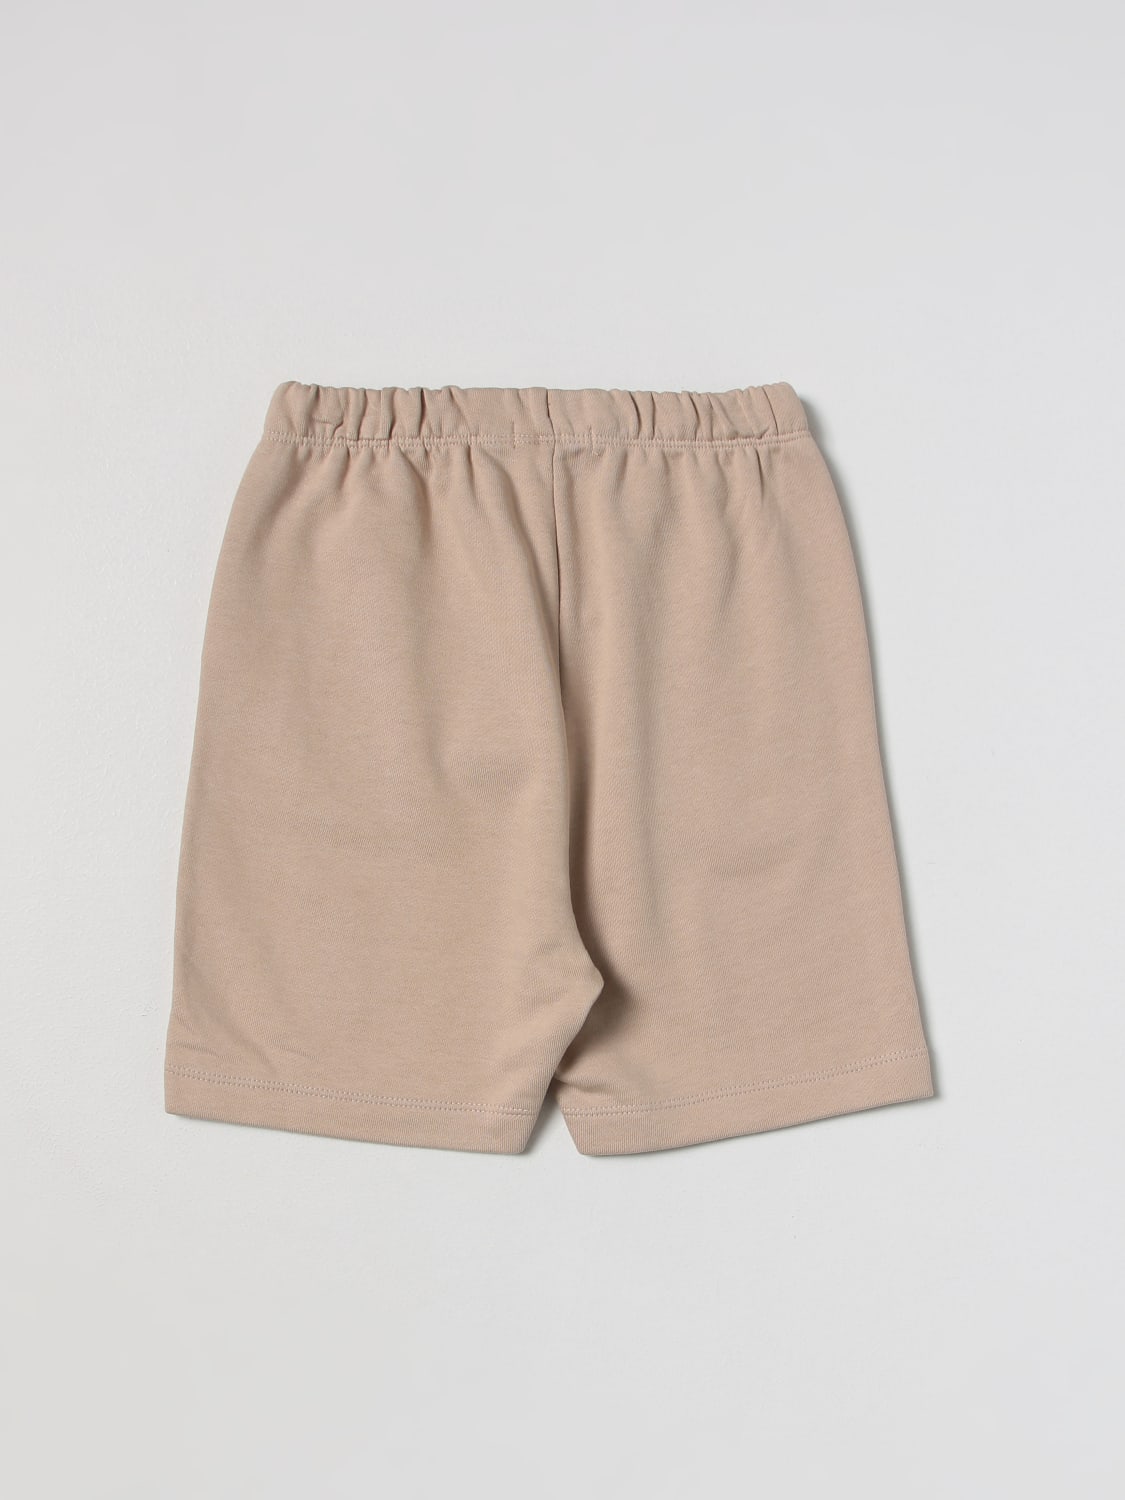 Calvin Klein Outlet: shorts for boys - Denim  Calvin Klein shorts  IB0IB01614 online at